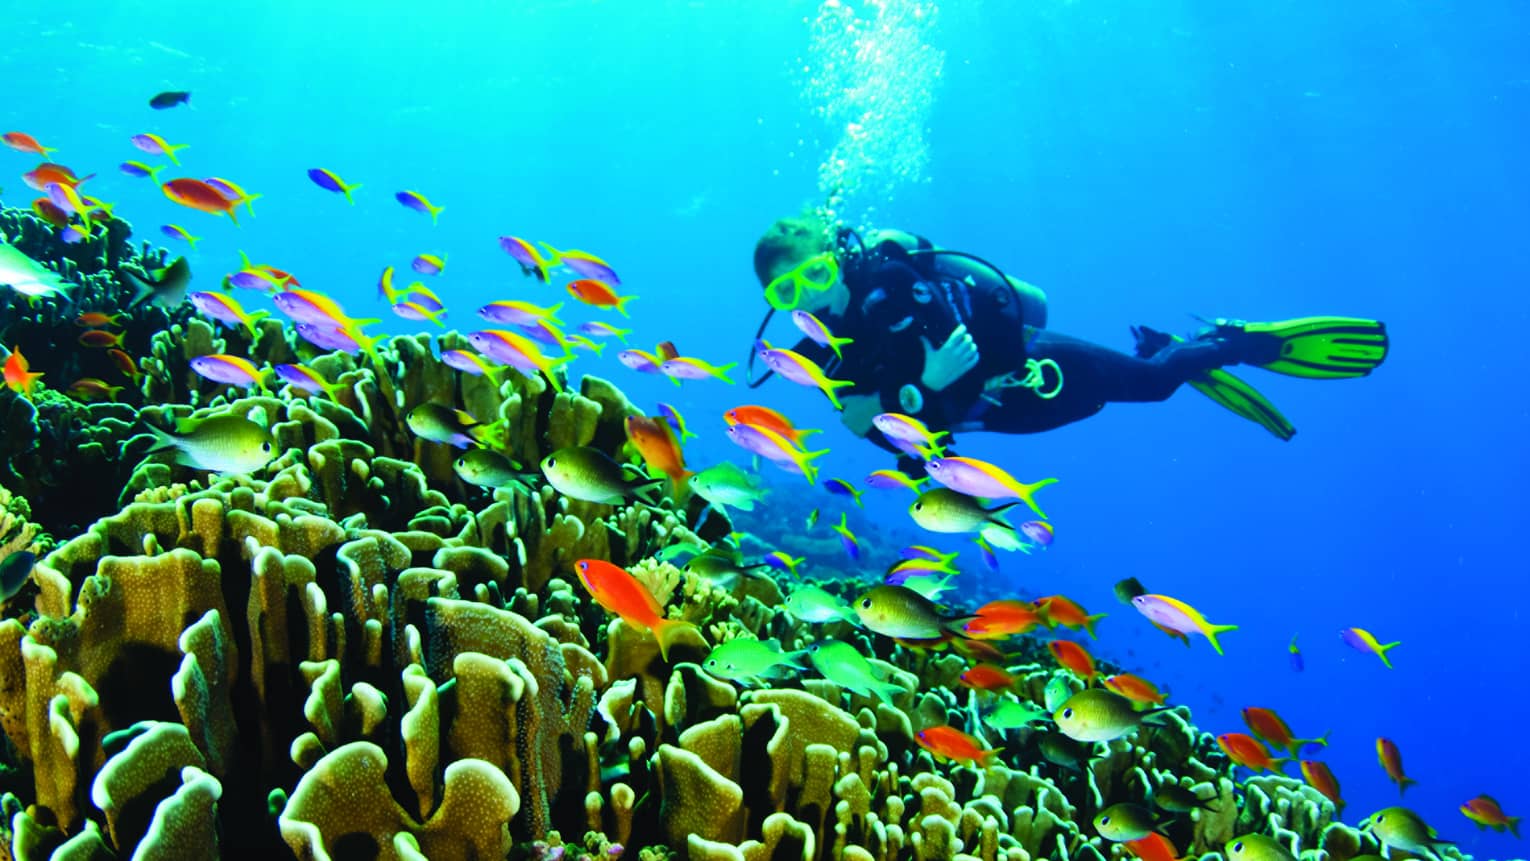 Scuba diver swims over colourful tropical fish, coral